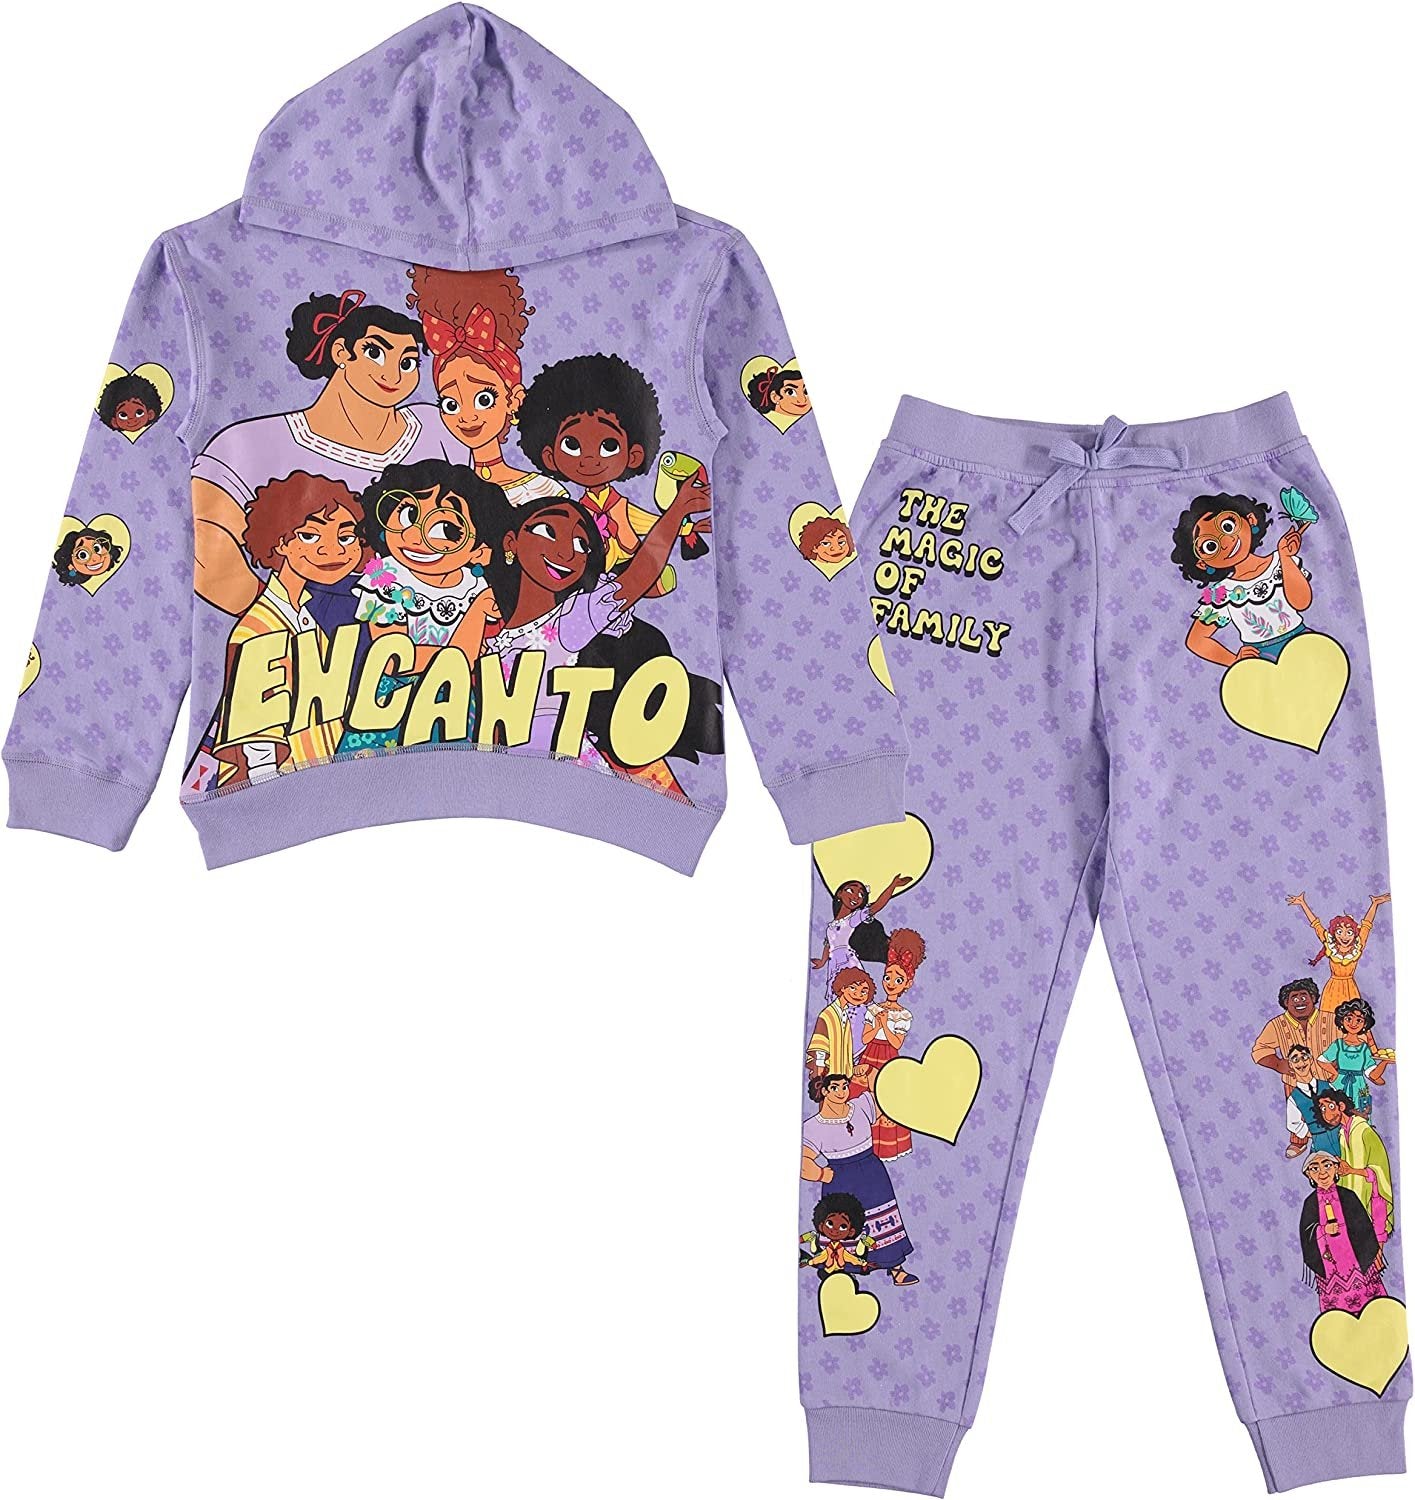 Disney Girls ENCANTO Hoodie and Jogger Clothing Set - Mirabel, Isabela and The Magic of Family 2 Piece Set Sizes 4-16